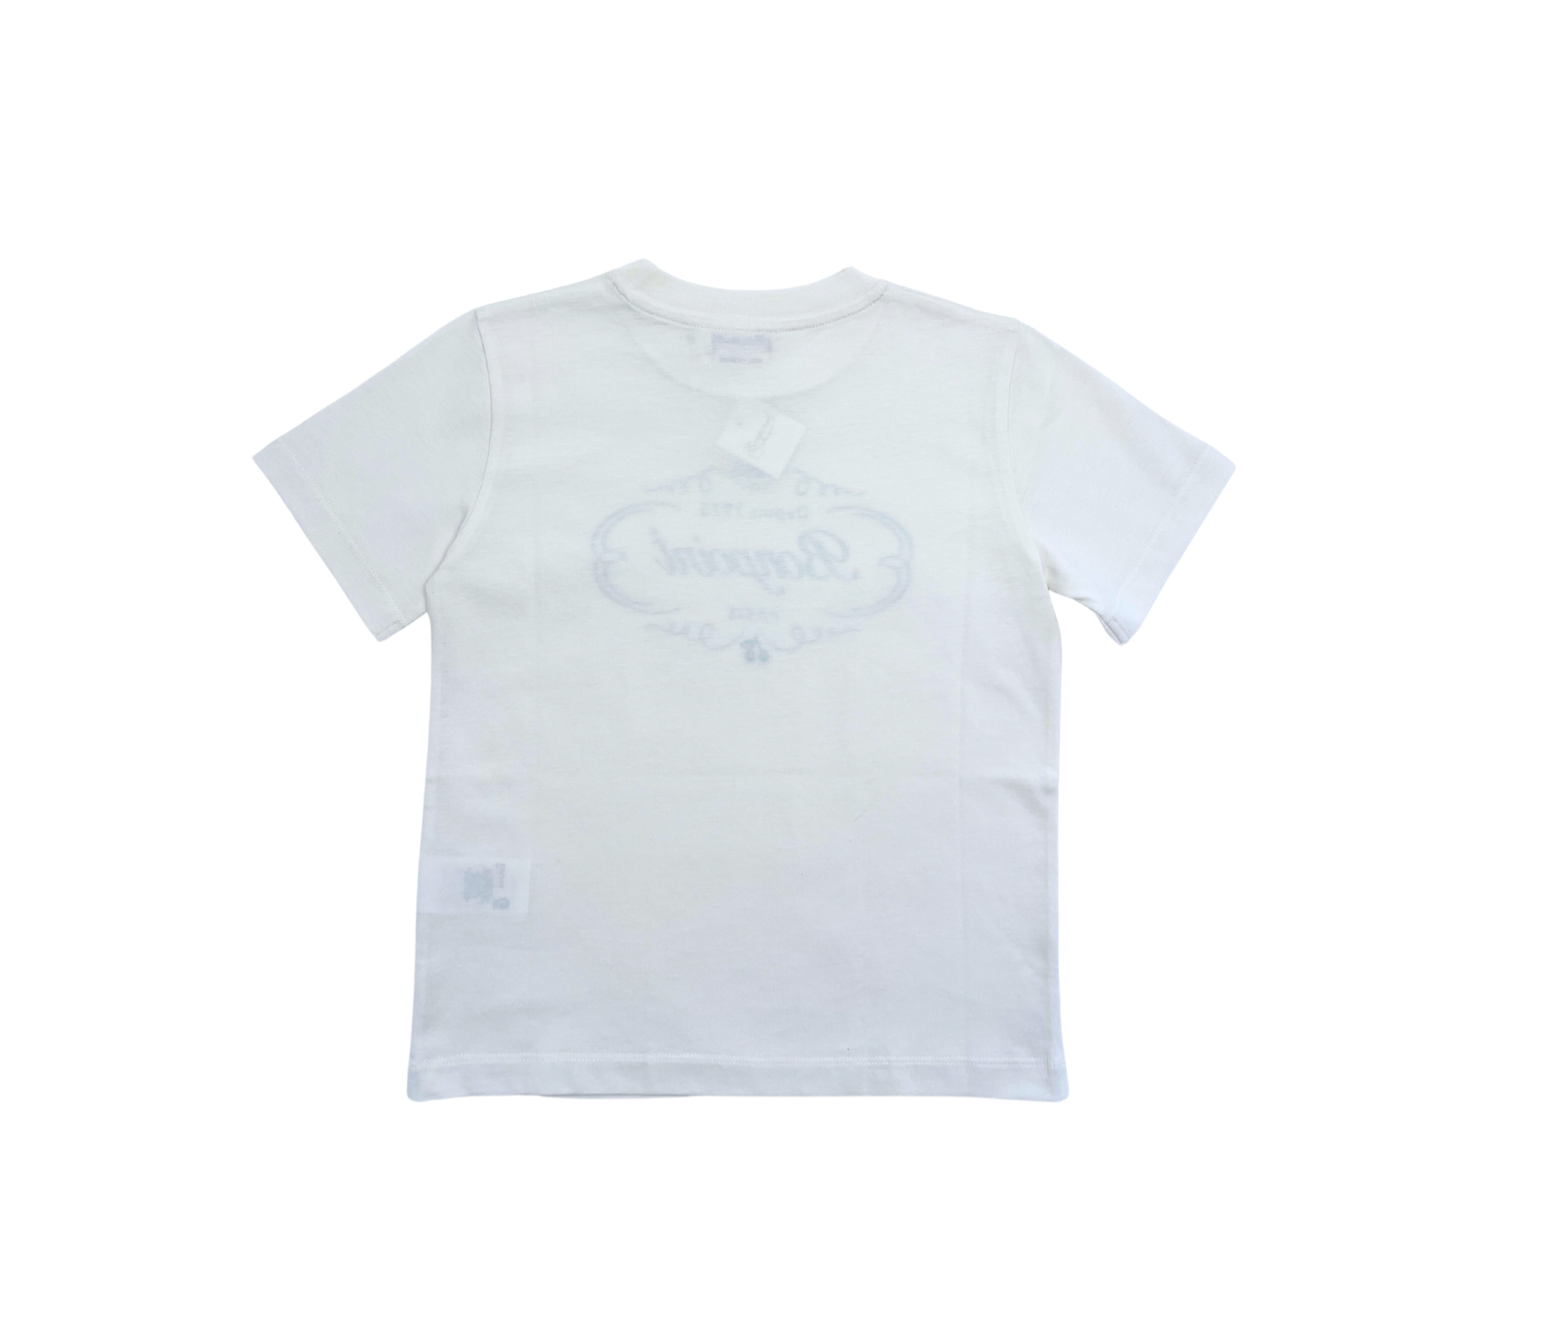 BONPOINT - T-shirt blanc "Bonpoint" - 6 ans